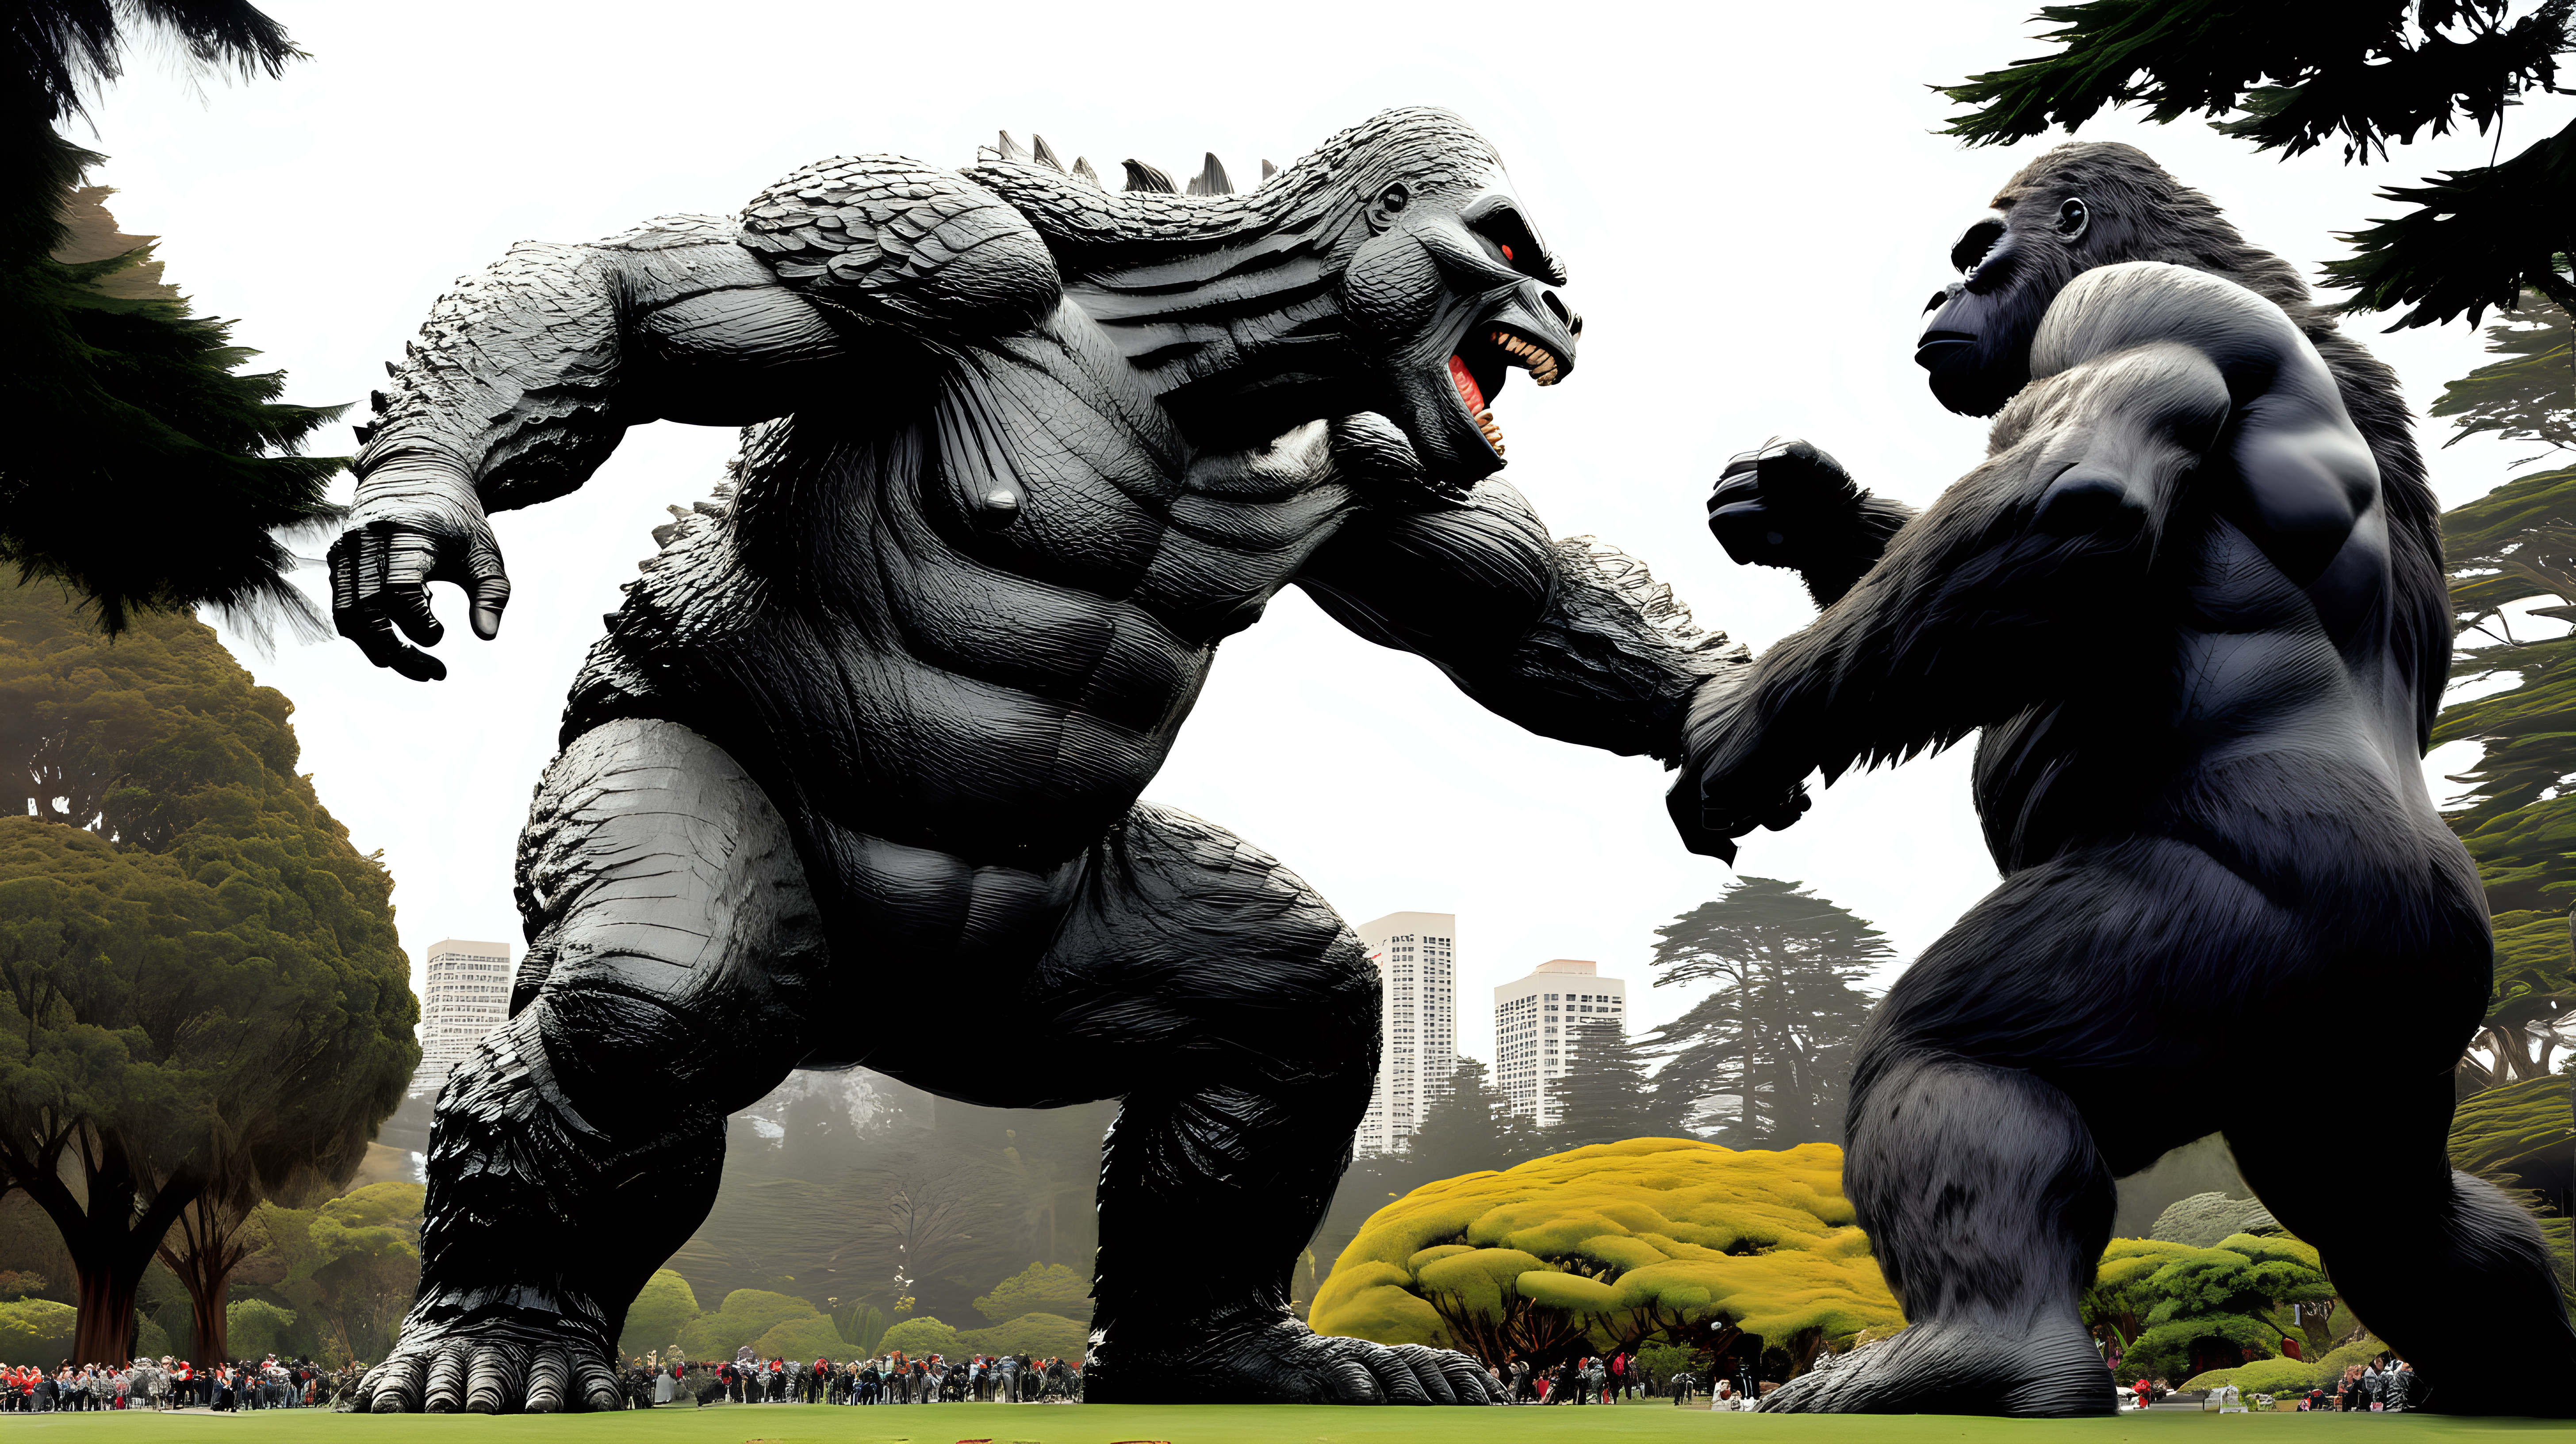 Godzilla & King Kong fighting in Golden Gate Park